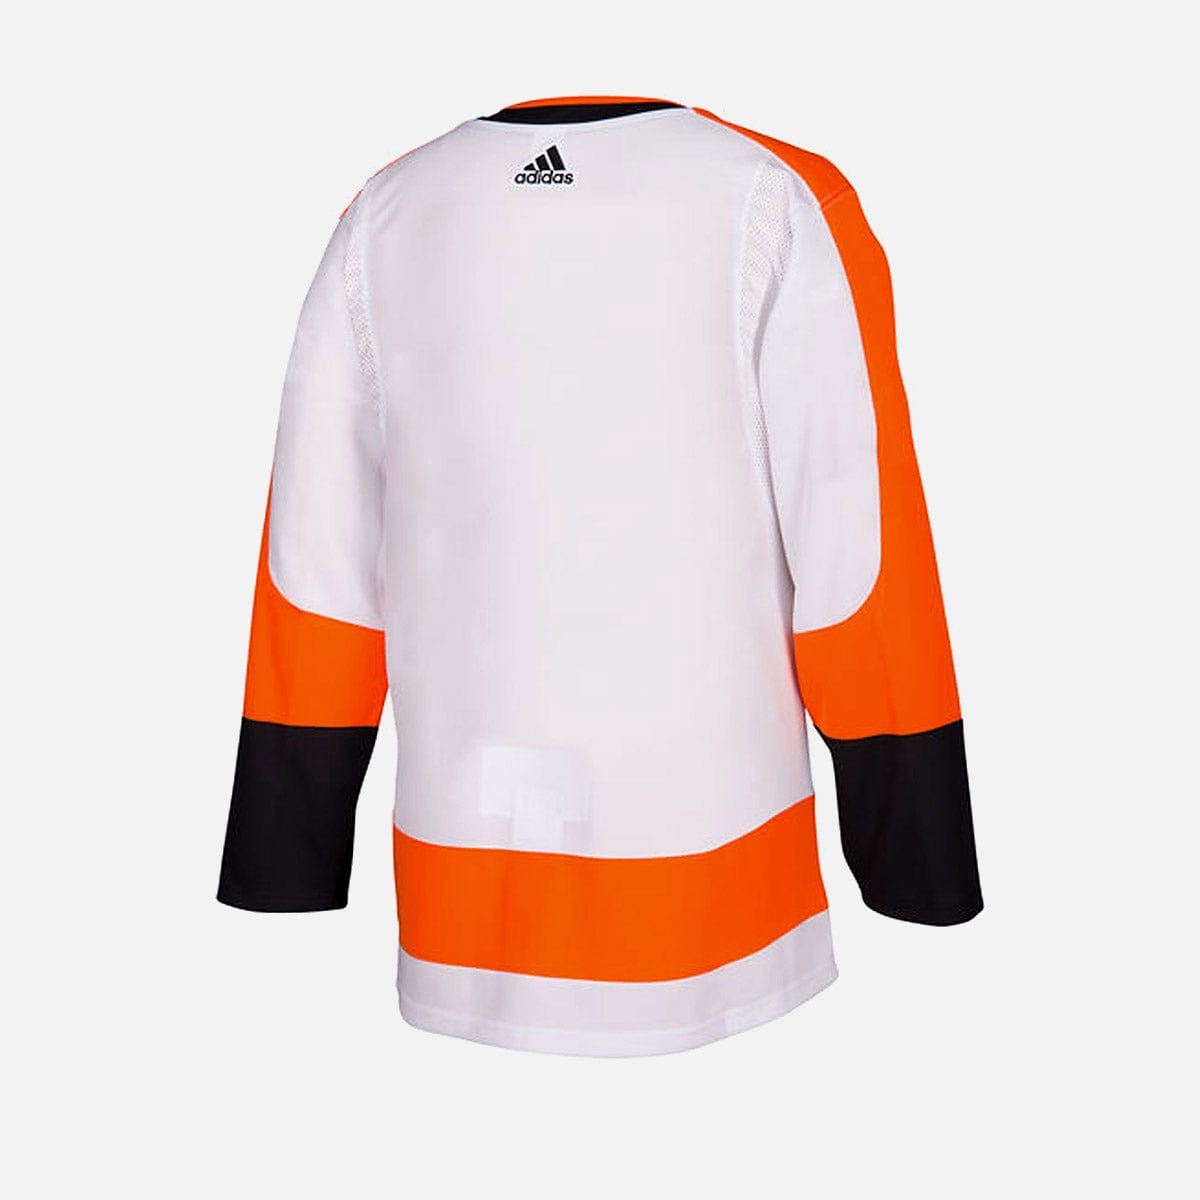 Philadelphia Flyers Away Adidas Authentic Senior Jersey